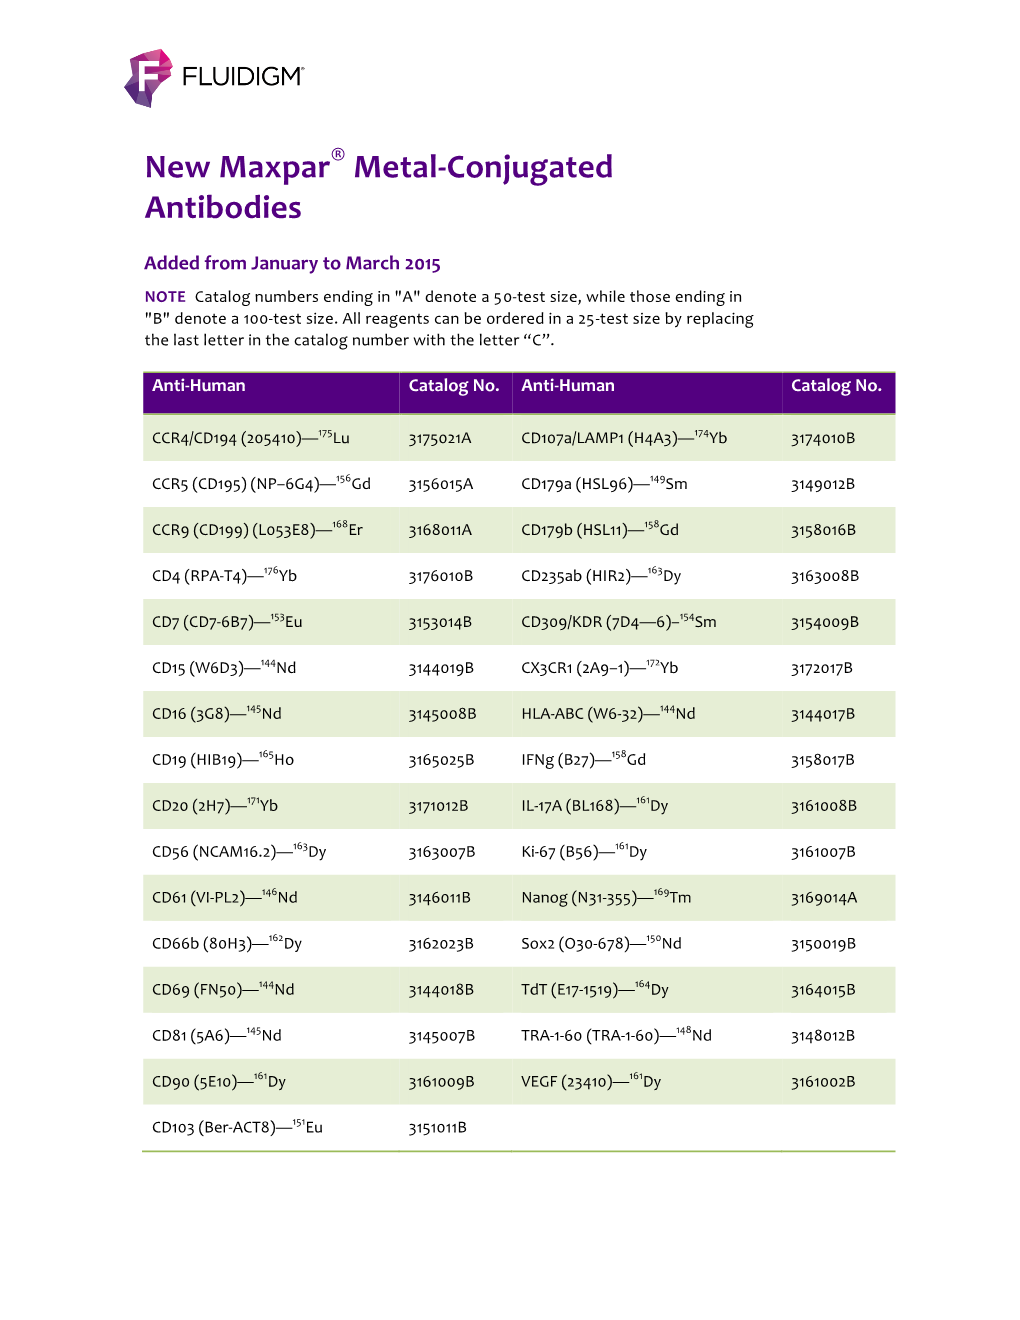 New Maxpar Metal-Conjugated Antibodies